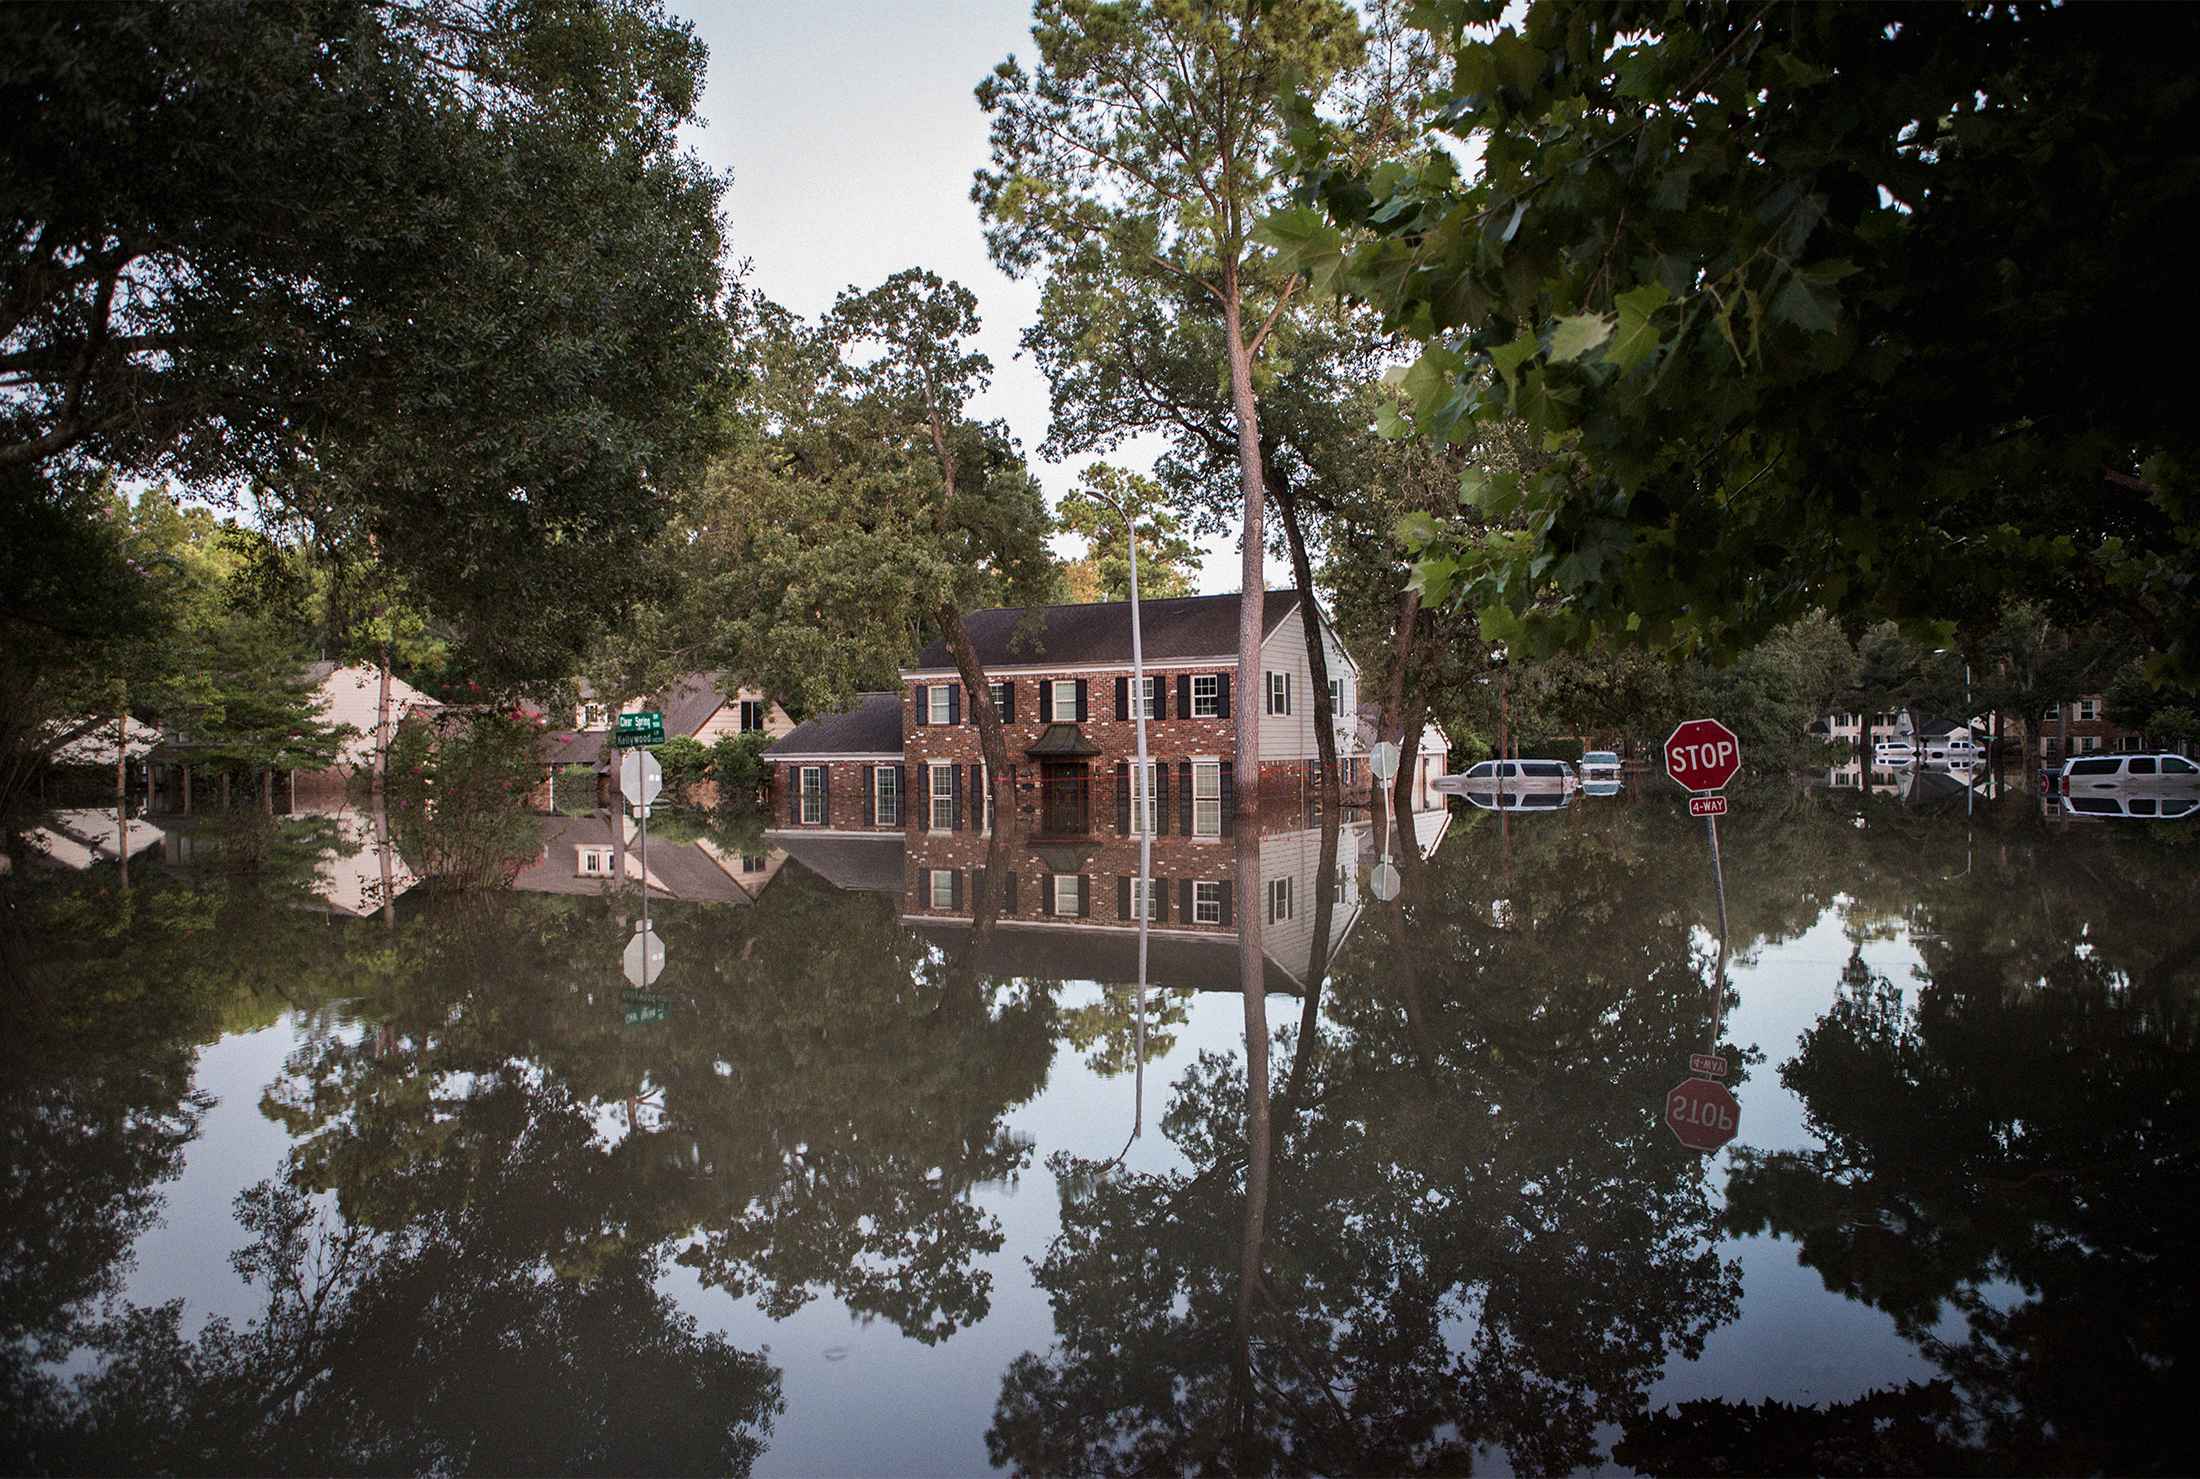 The flooded Nottingham Forest neighborhood of Houston after Hurricane Harvey.